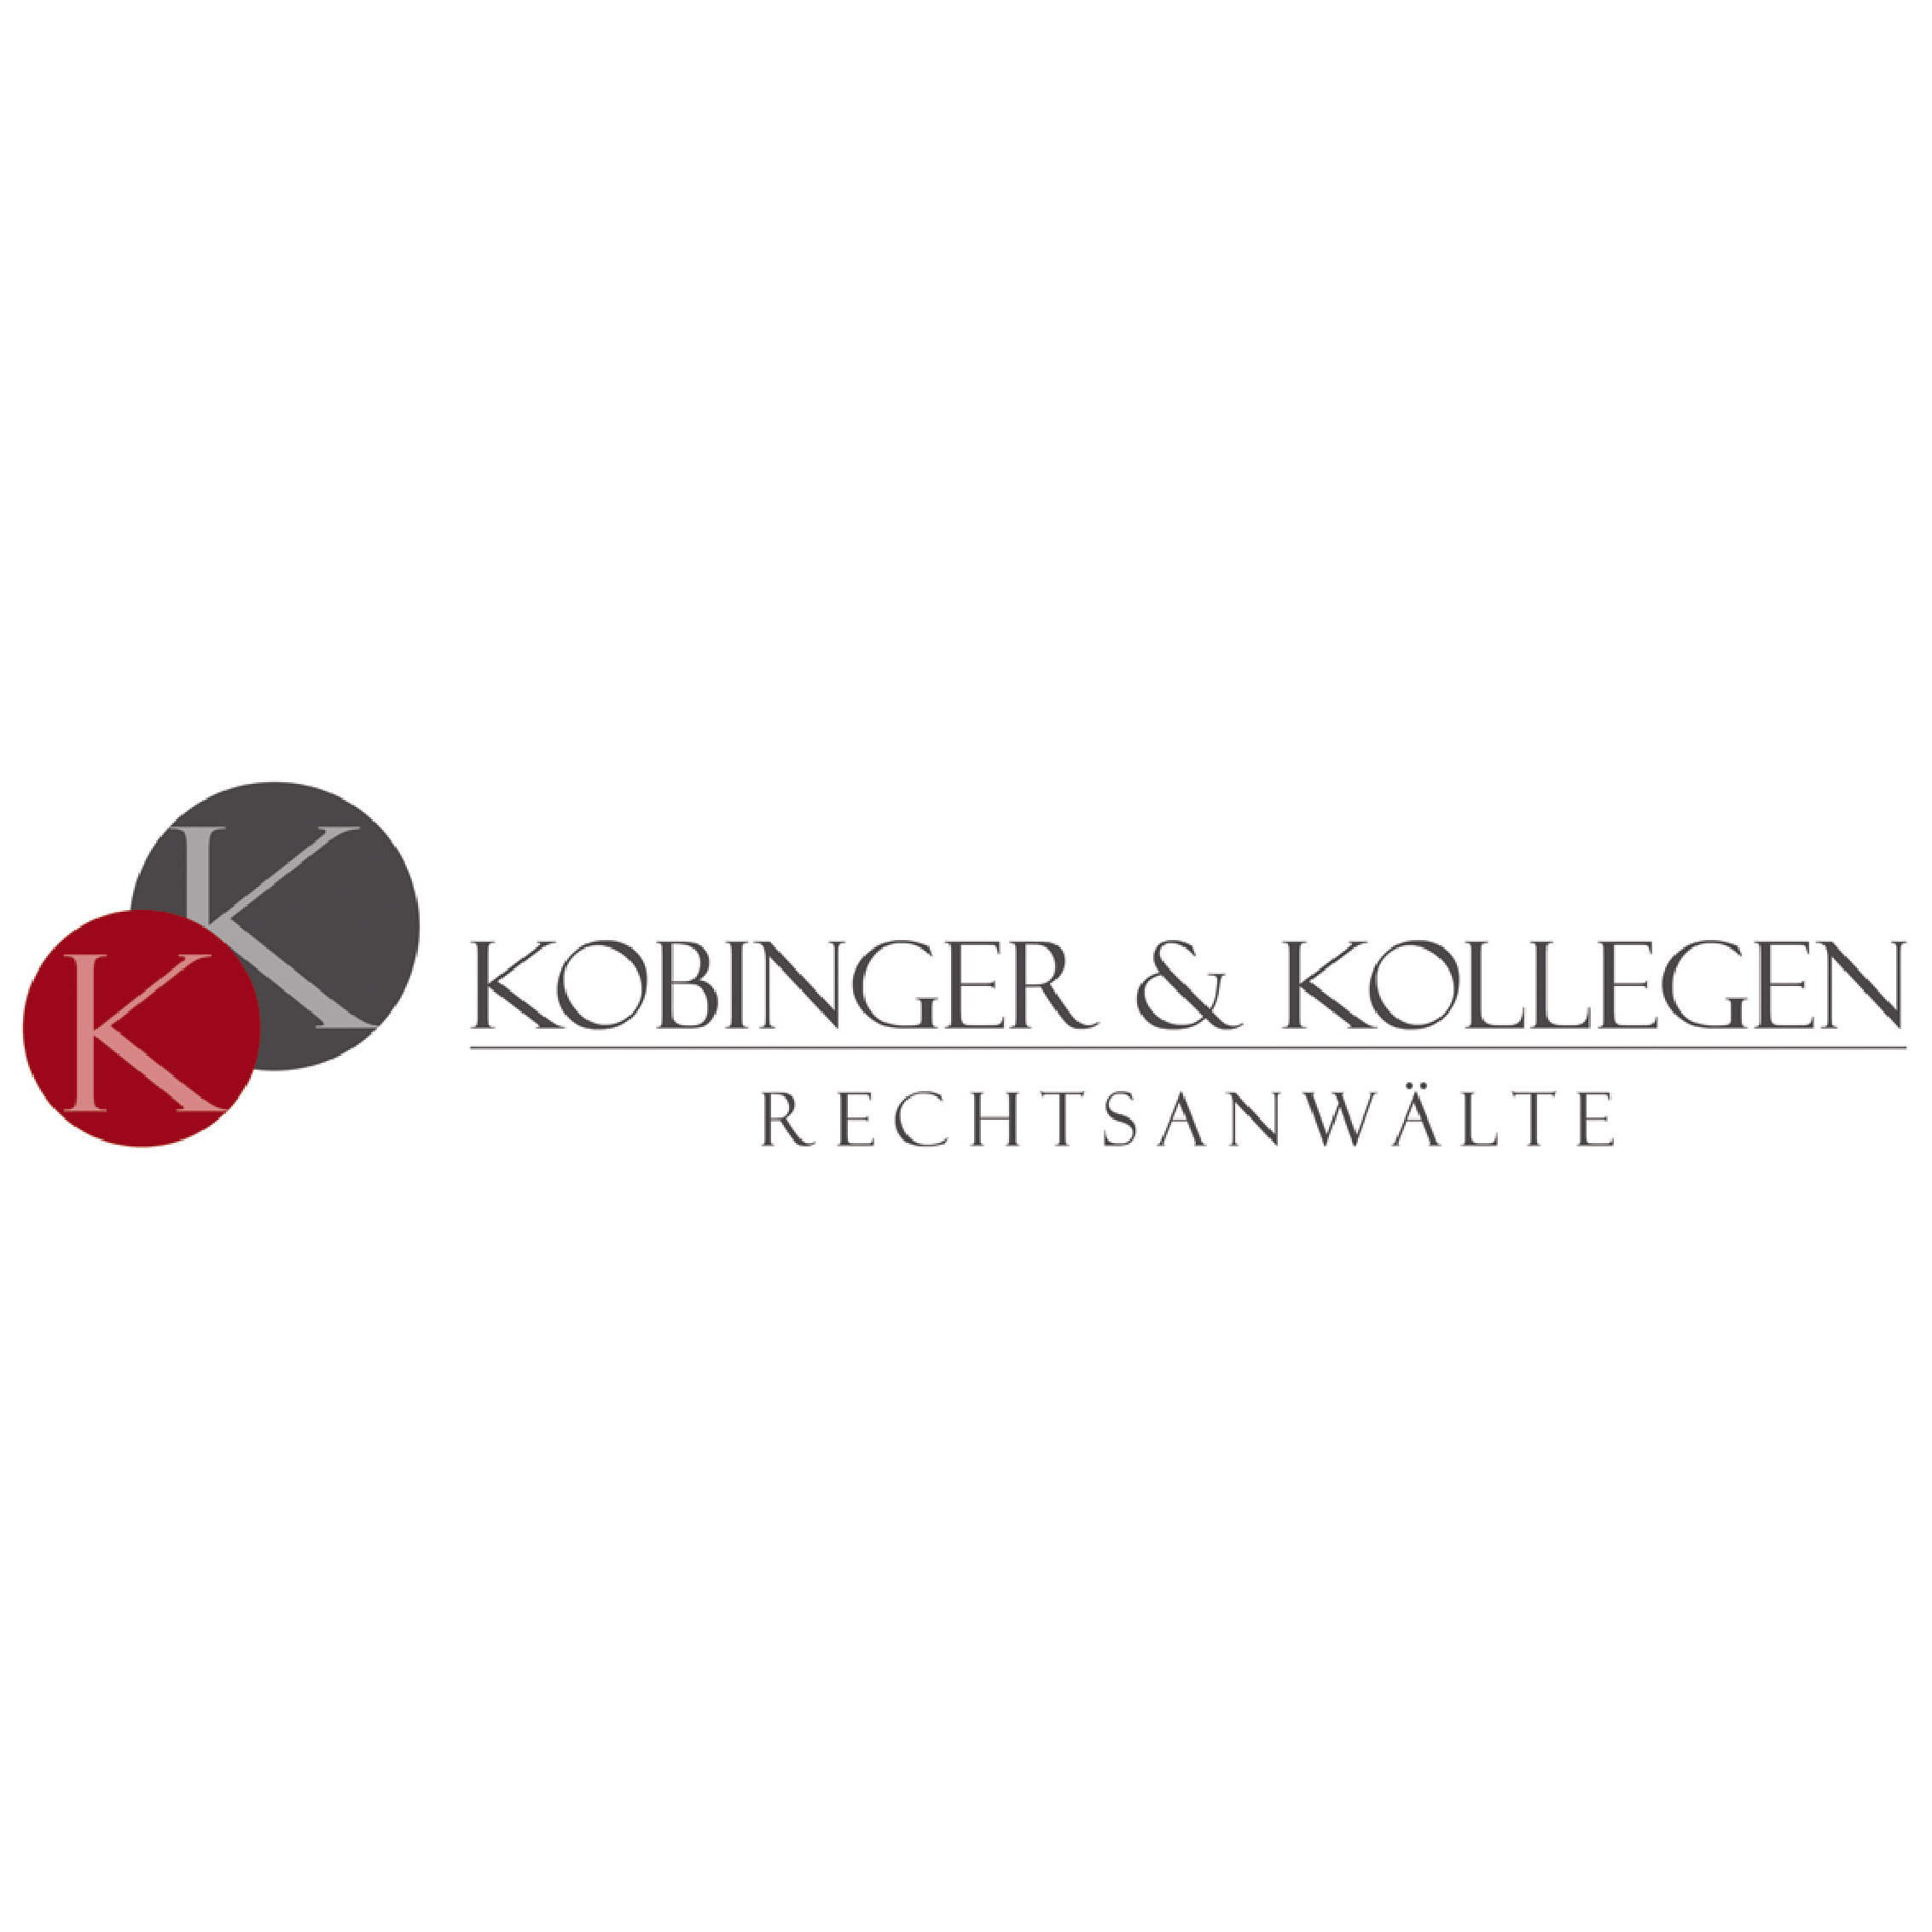 Kobinger & Kollegen Rechtsanwälte Logo